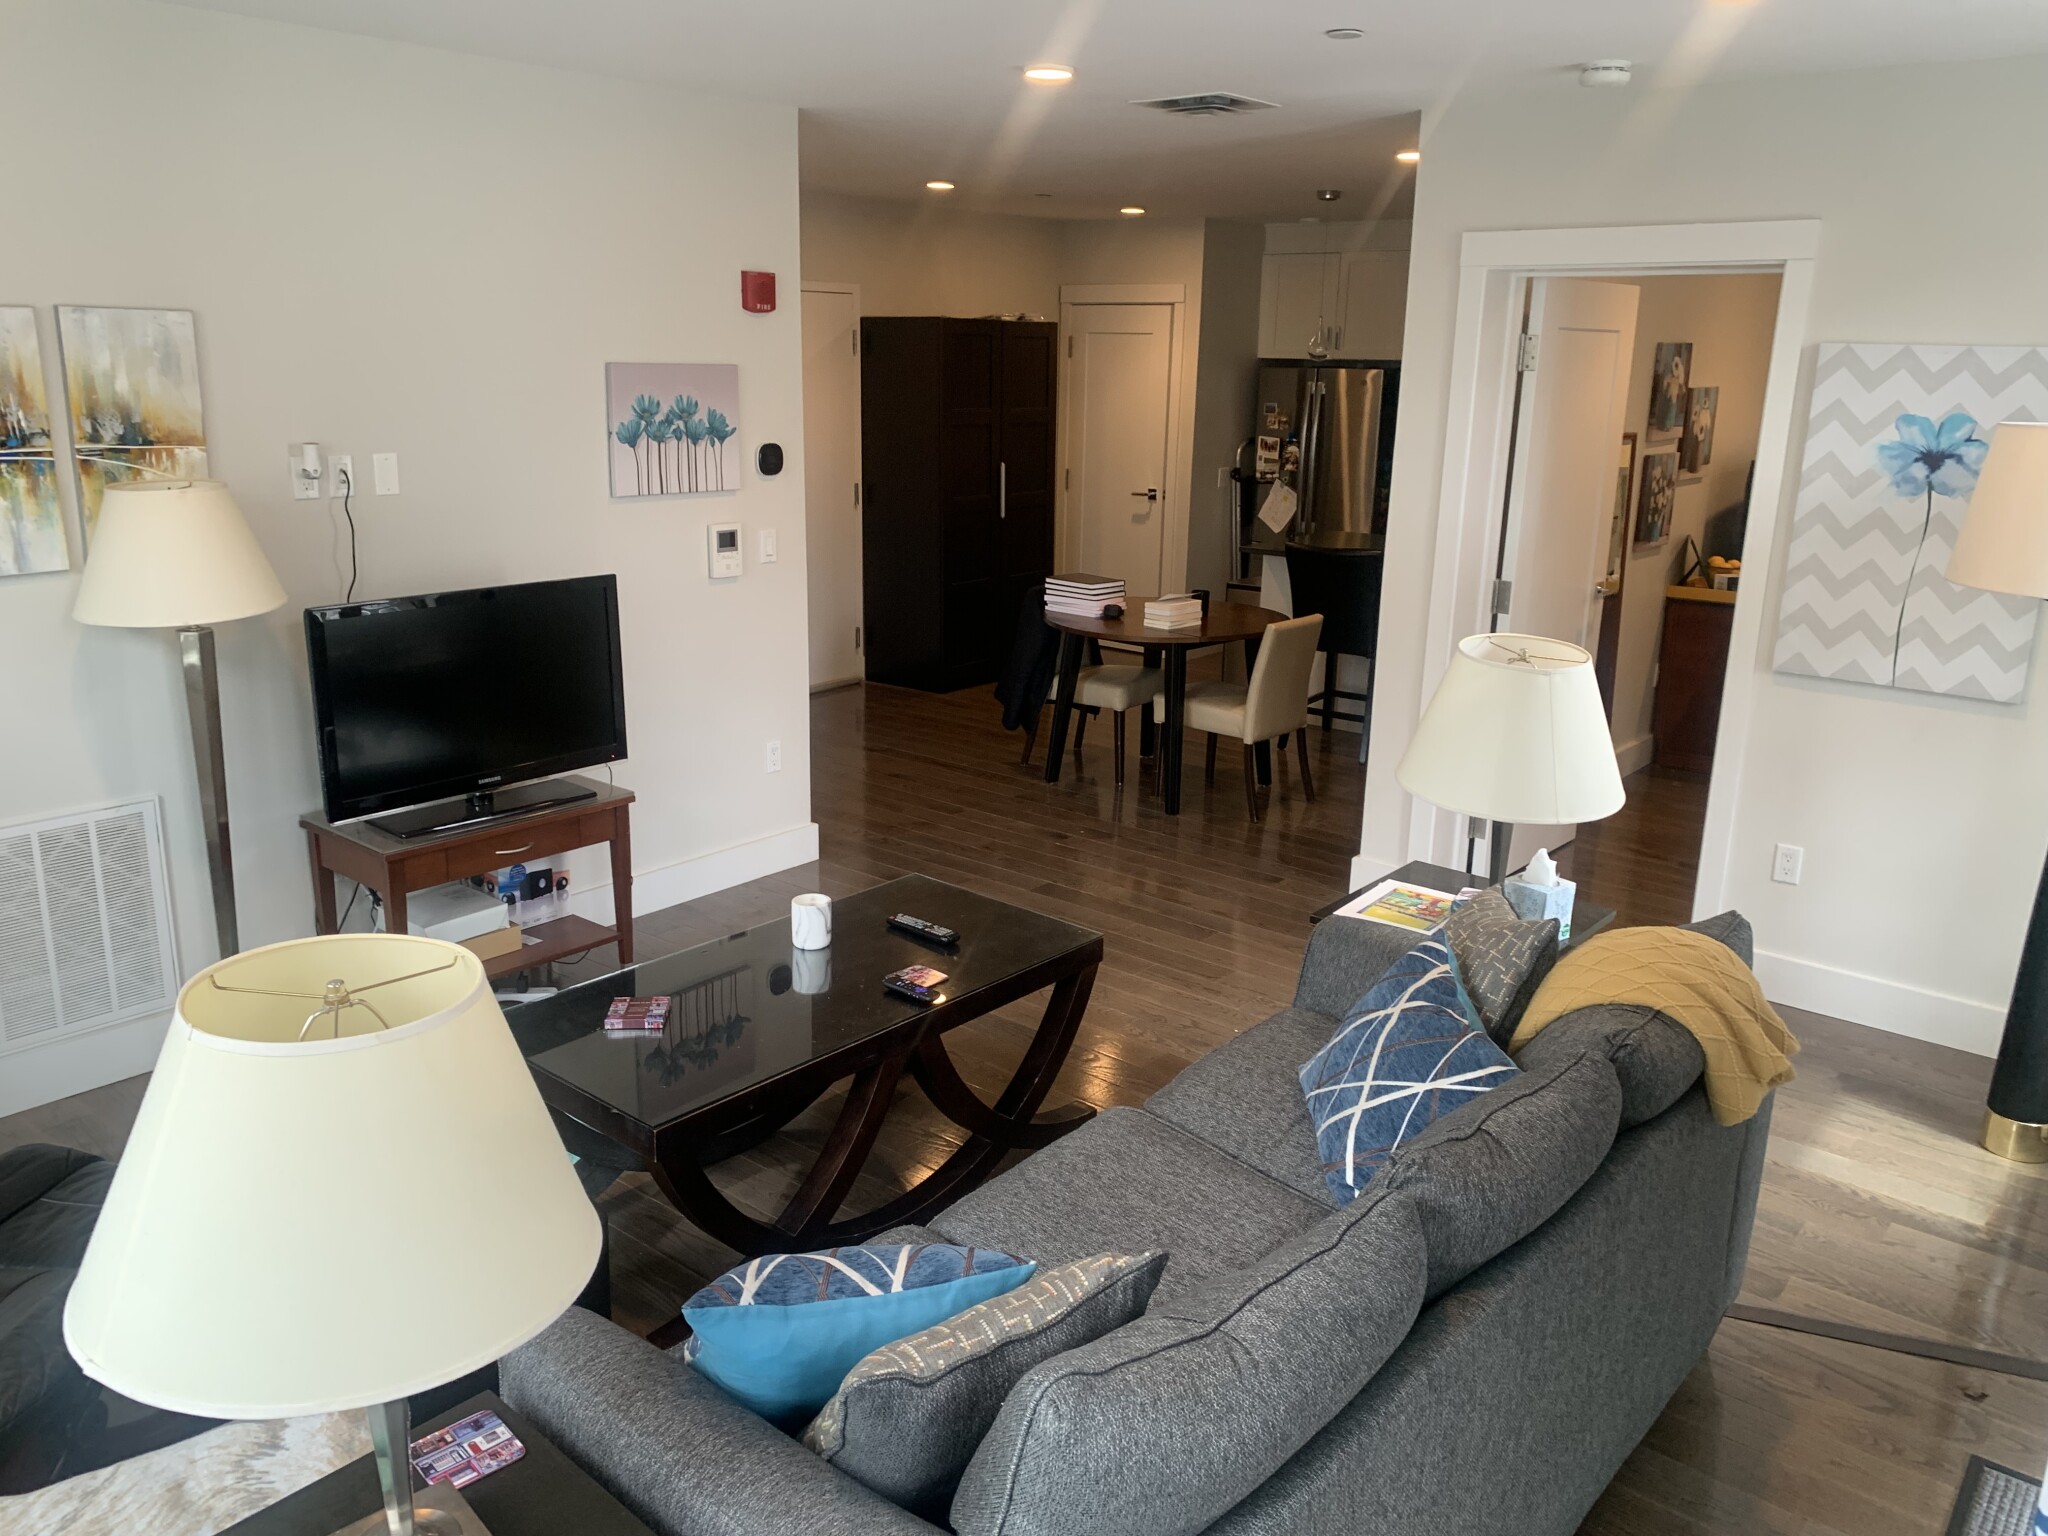 Photos of apartment on McGrath,Somerville MA 02143